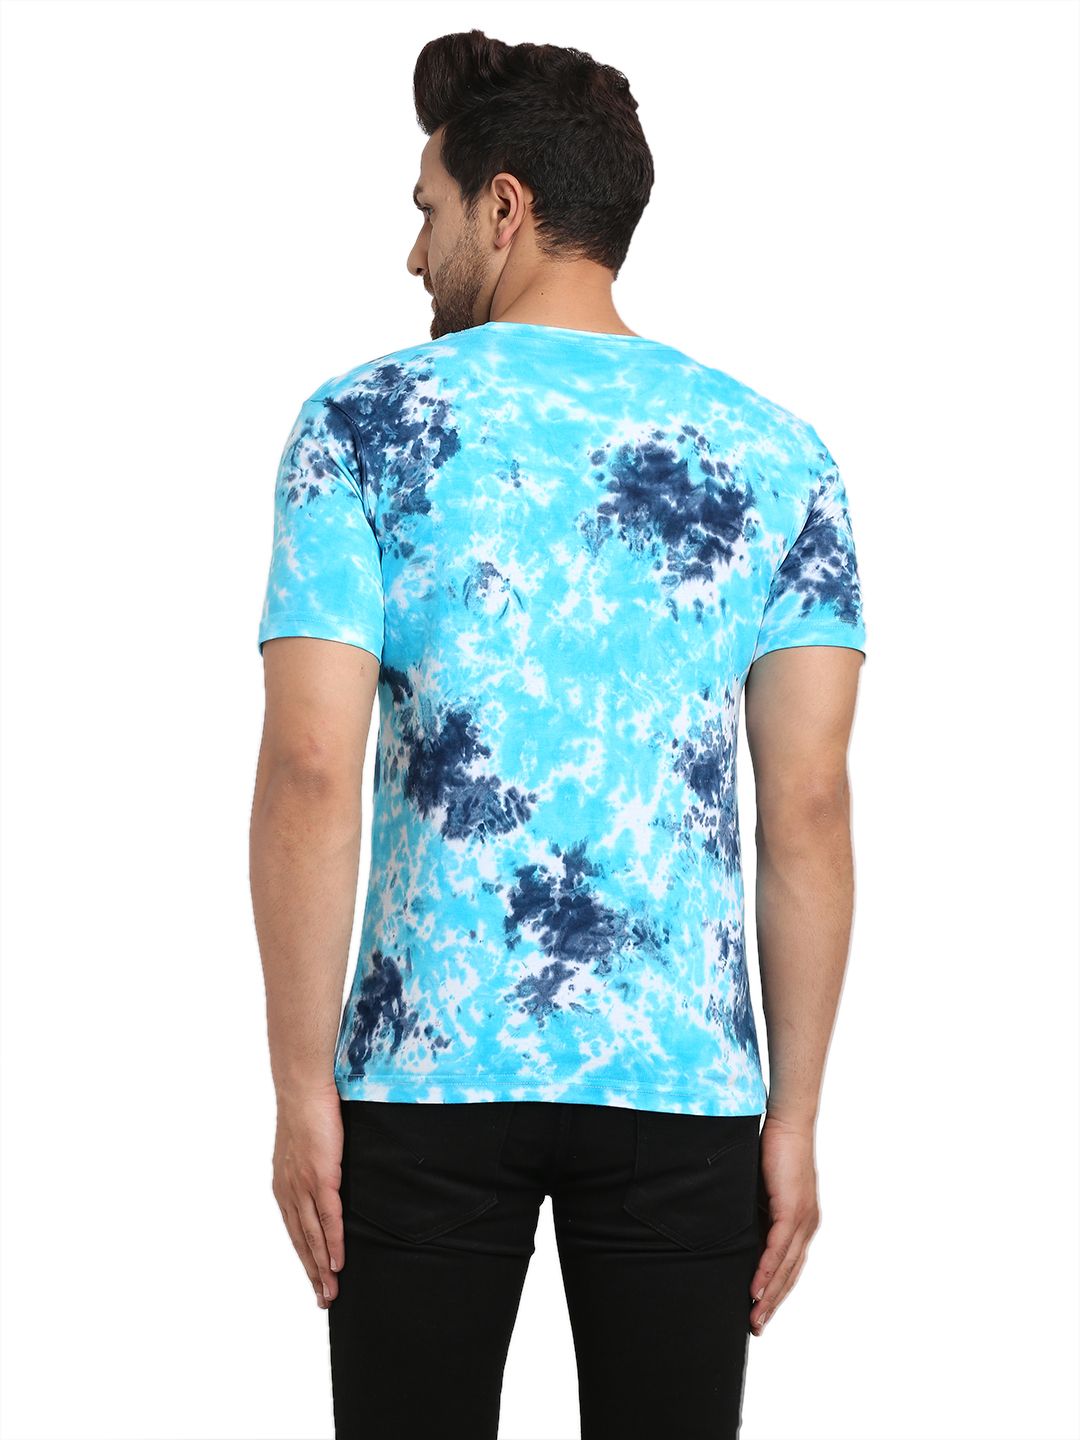 Patchy Pattern, Men Combed Cotton Tie & Dye Blue T-Shirt